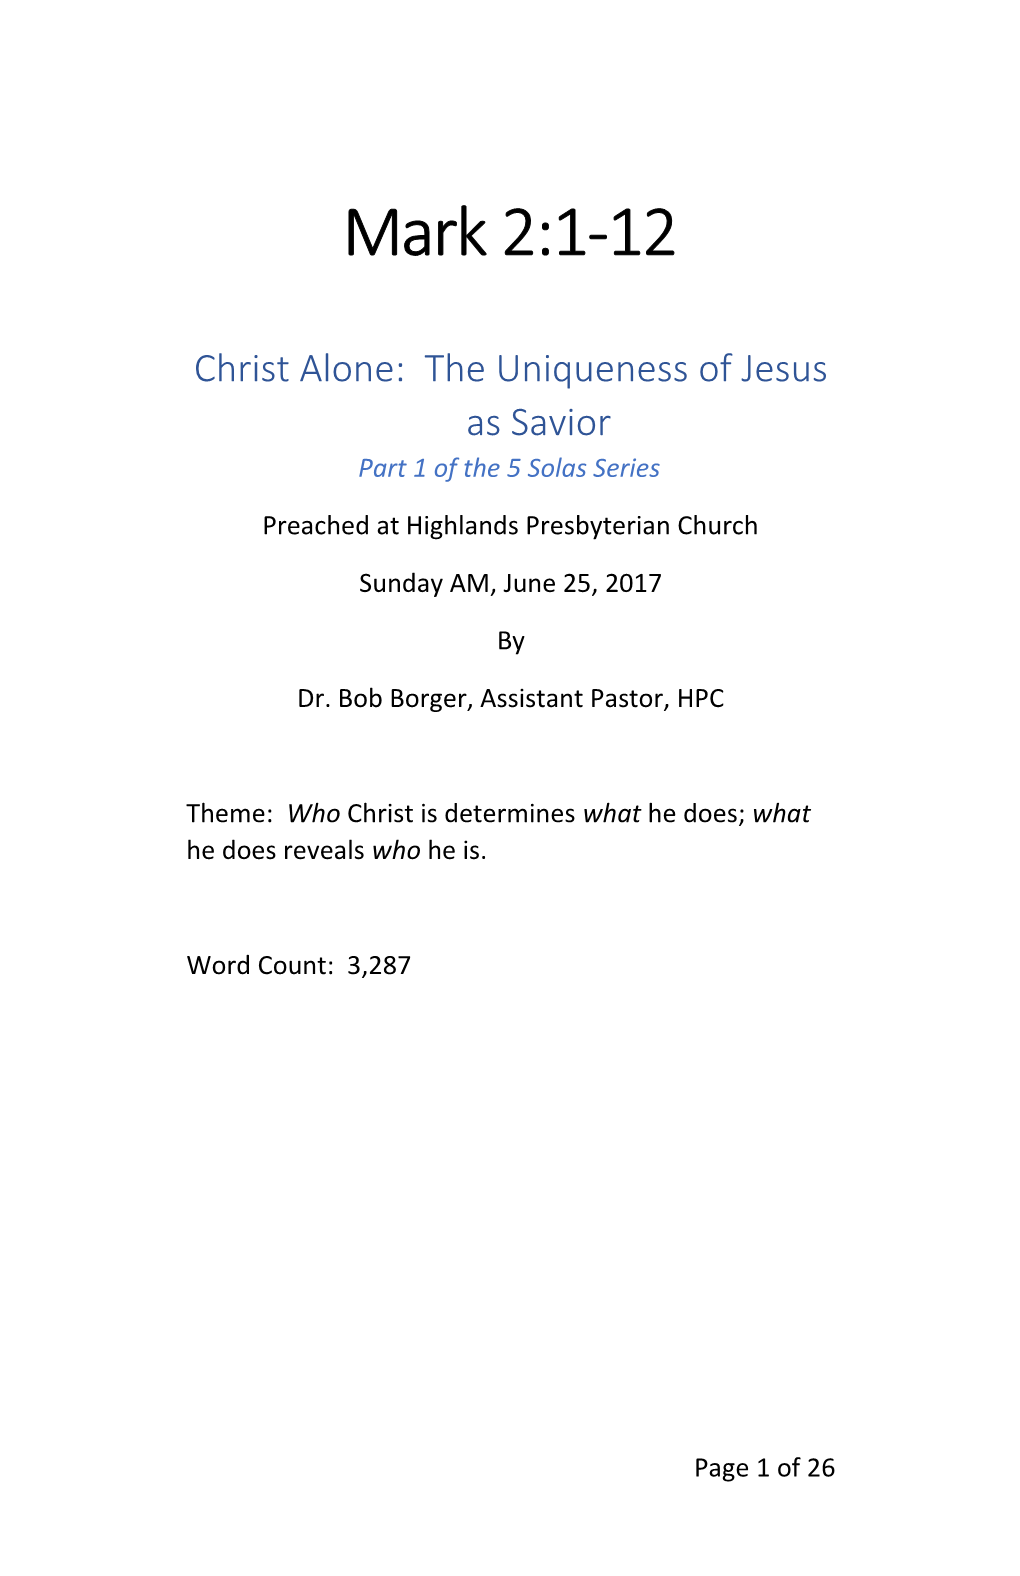 Christ Alone: the Uniqueness of Jesus As Savior